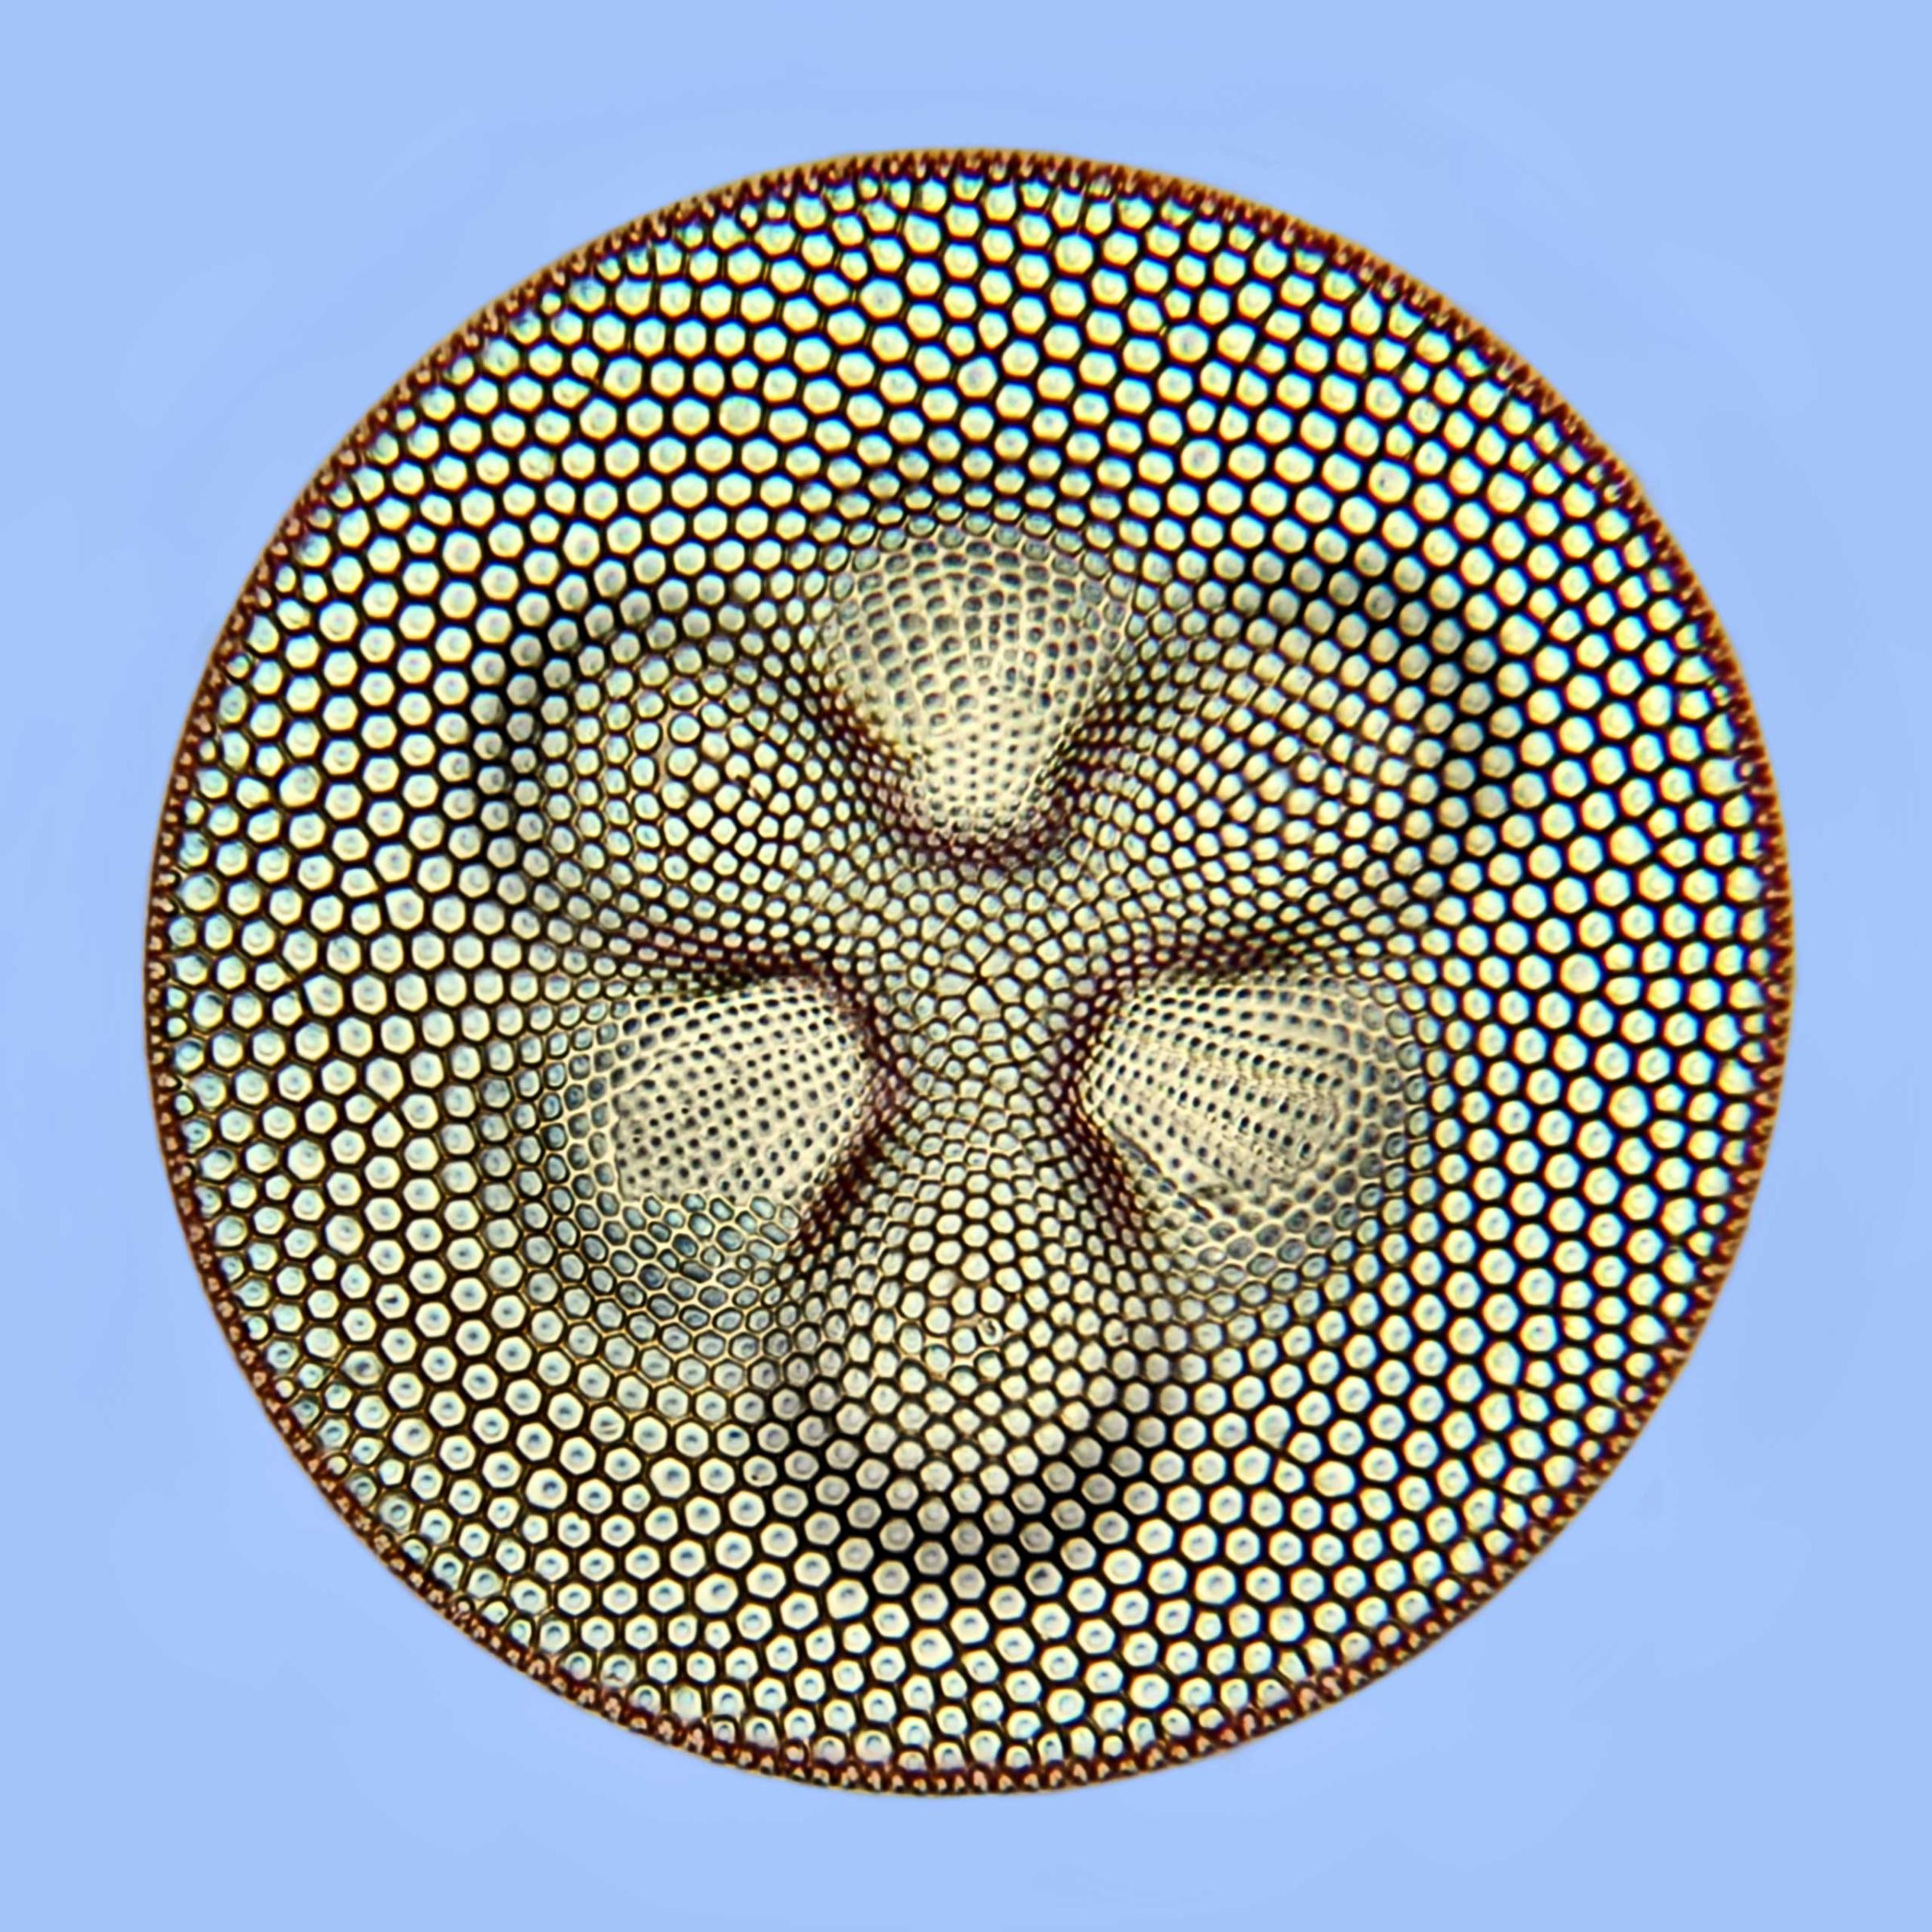 A diatom at 500x magnification.